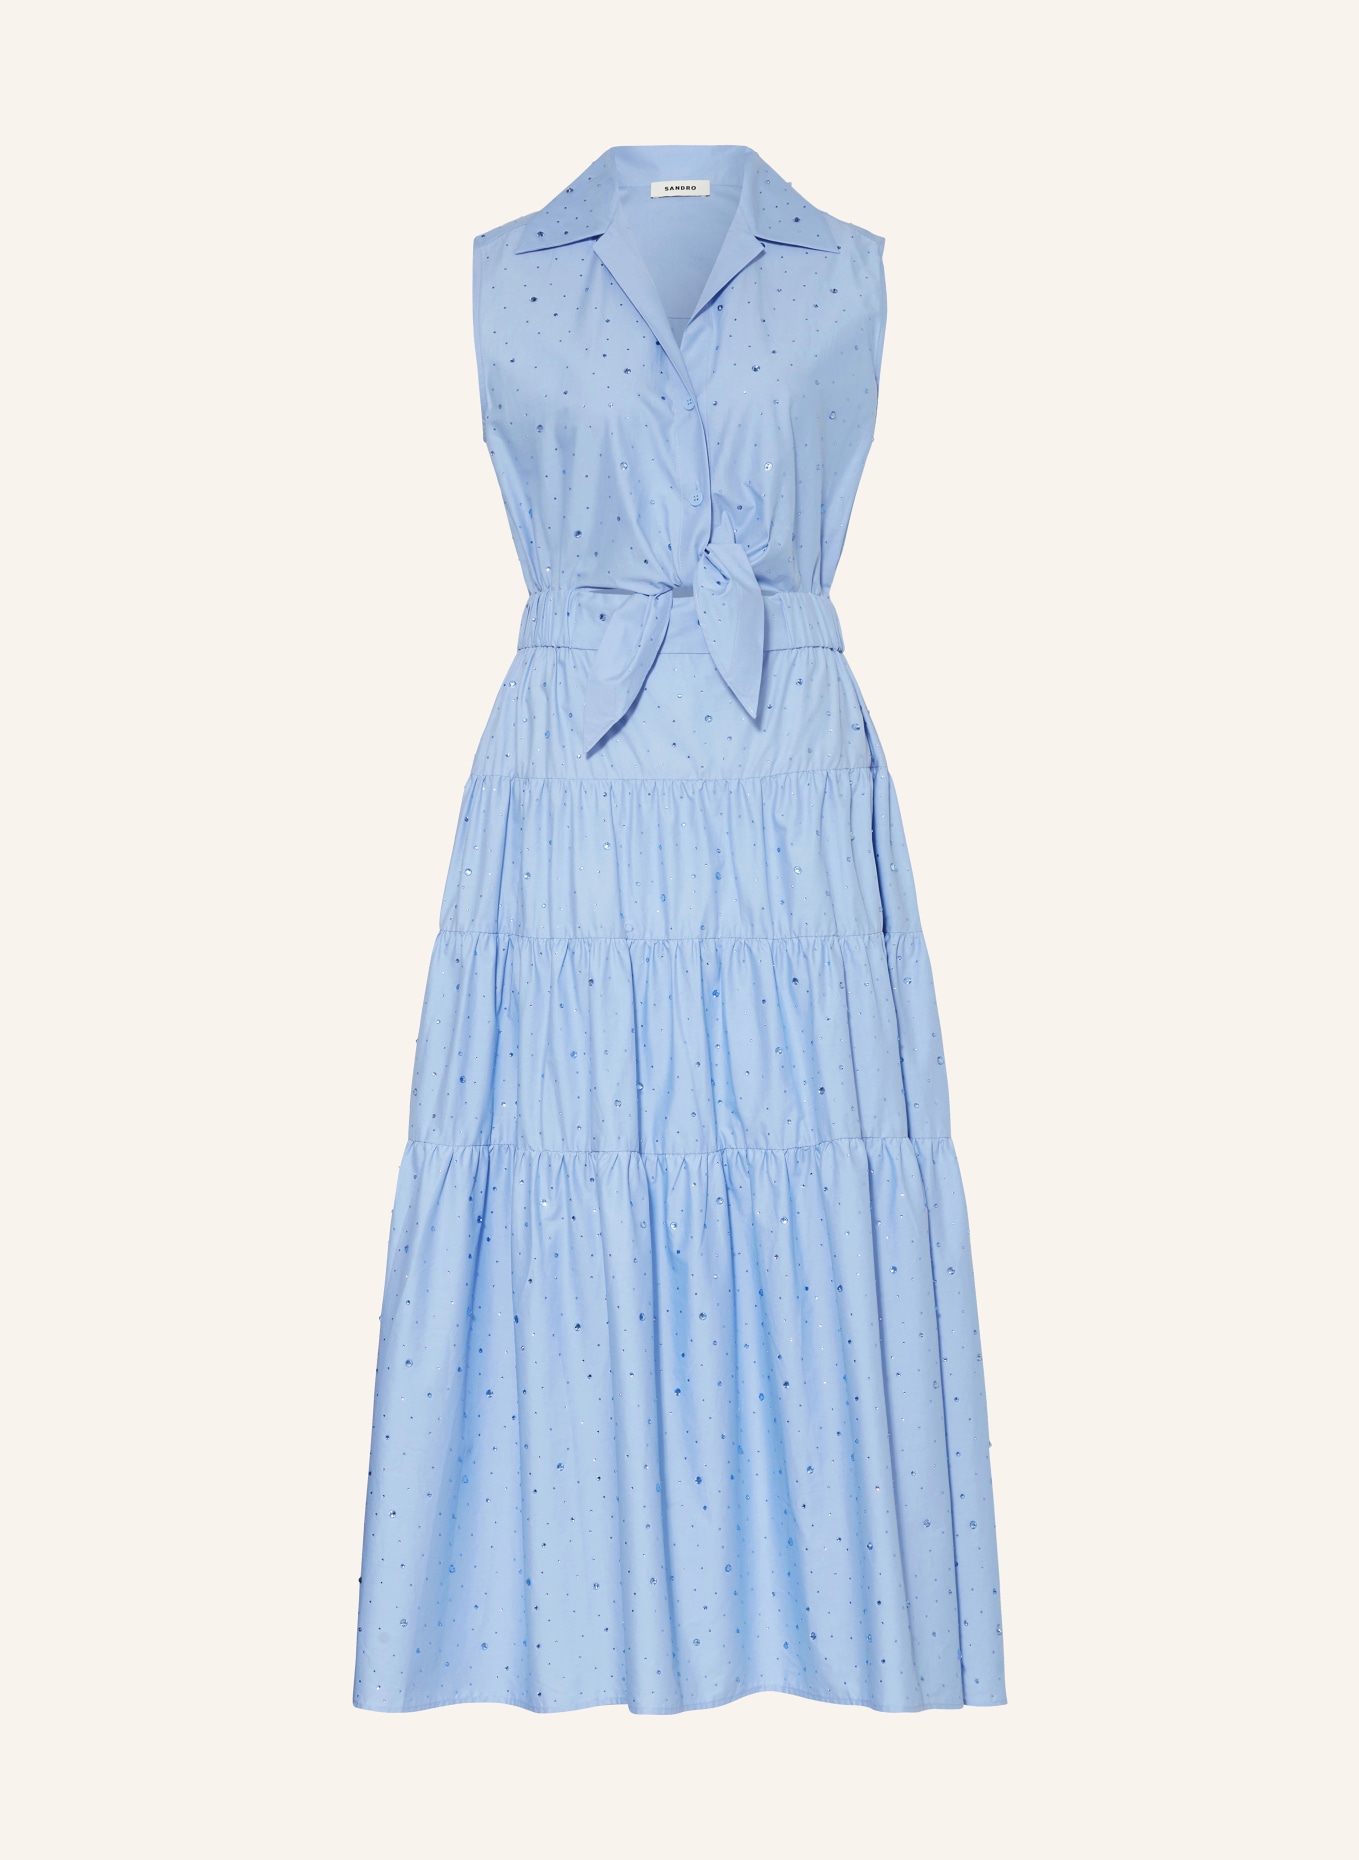 SANDRO Hemdblusenkleid mit Schmucksteinen, Farbe: HELLBLAU (Bild 1)